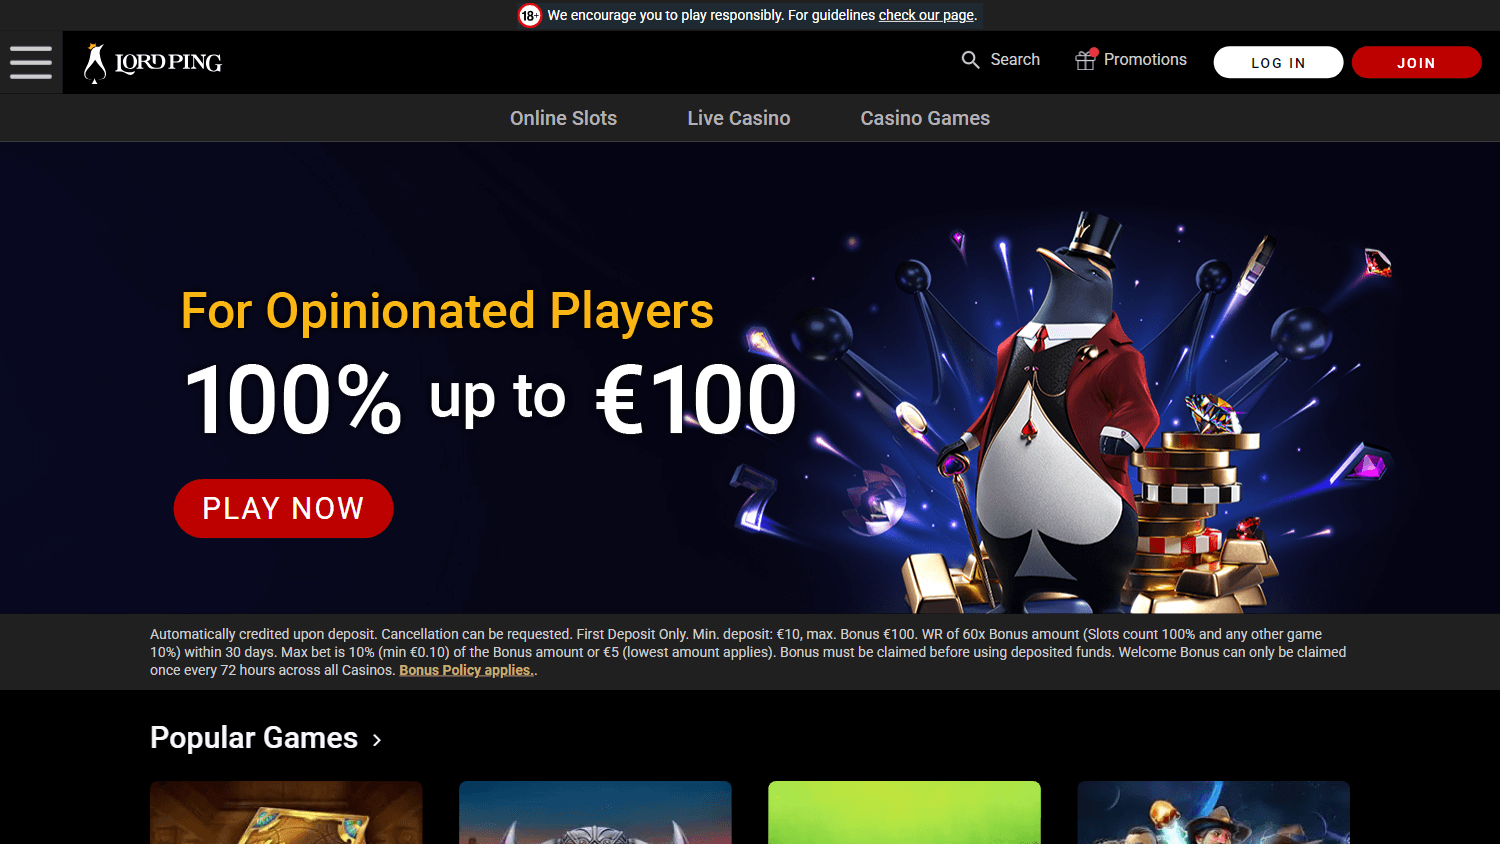 lord_ping_casino_homepage_desktop